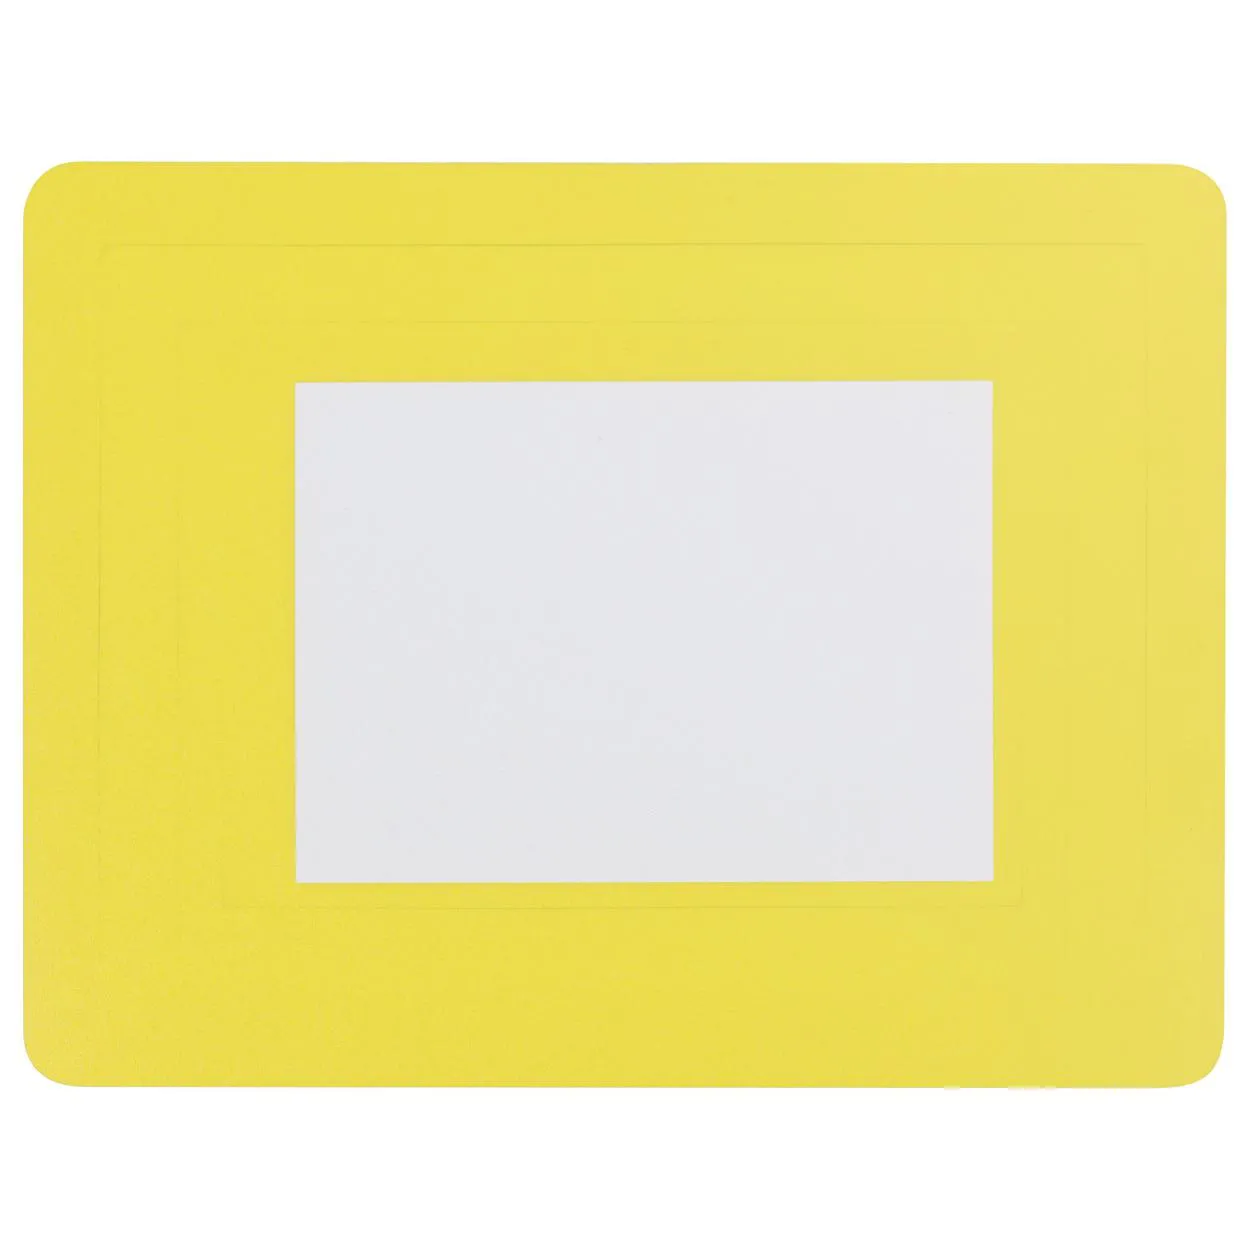 Ramă foto/mouse pad Pictium galben